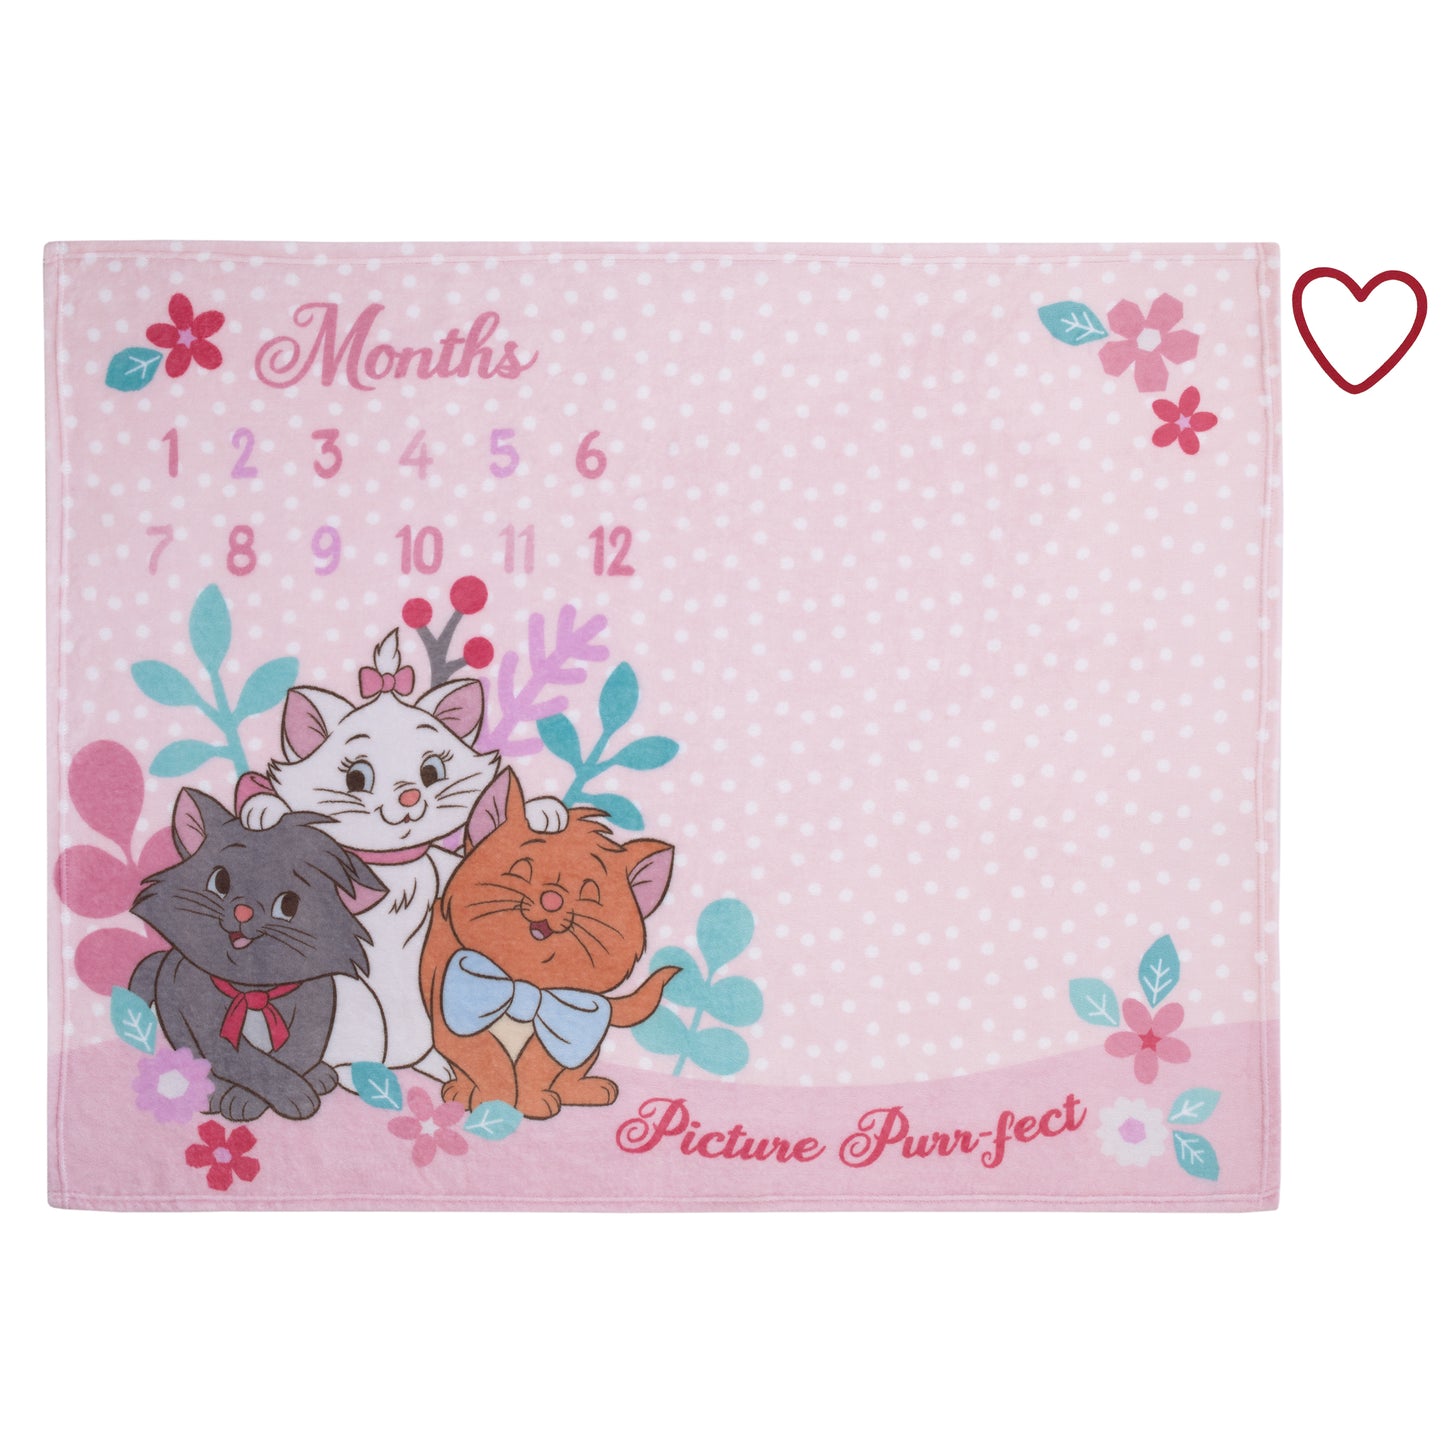 Disney Aristocats Pink Picture Purr-fect Super Soft Photo Op Milestone Baby Blanket